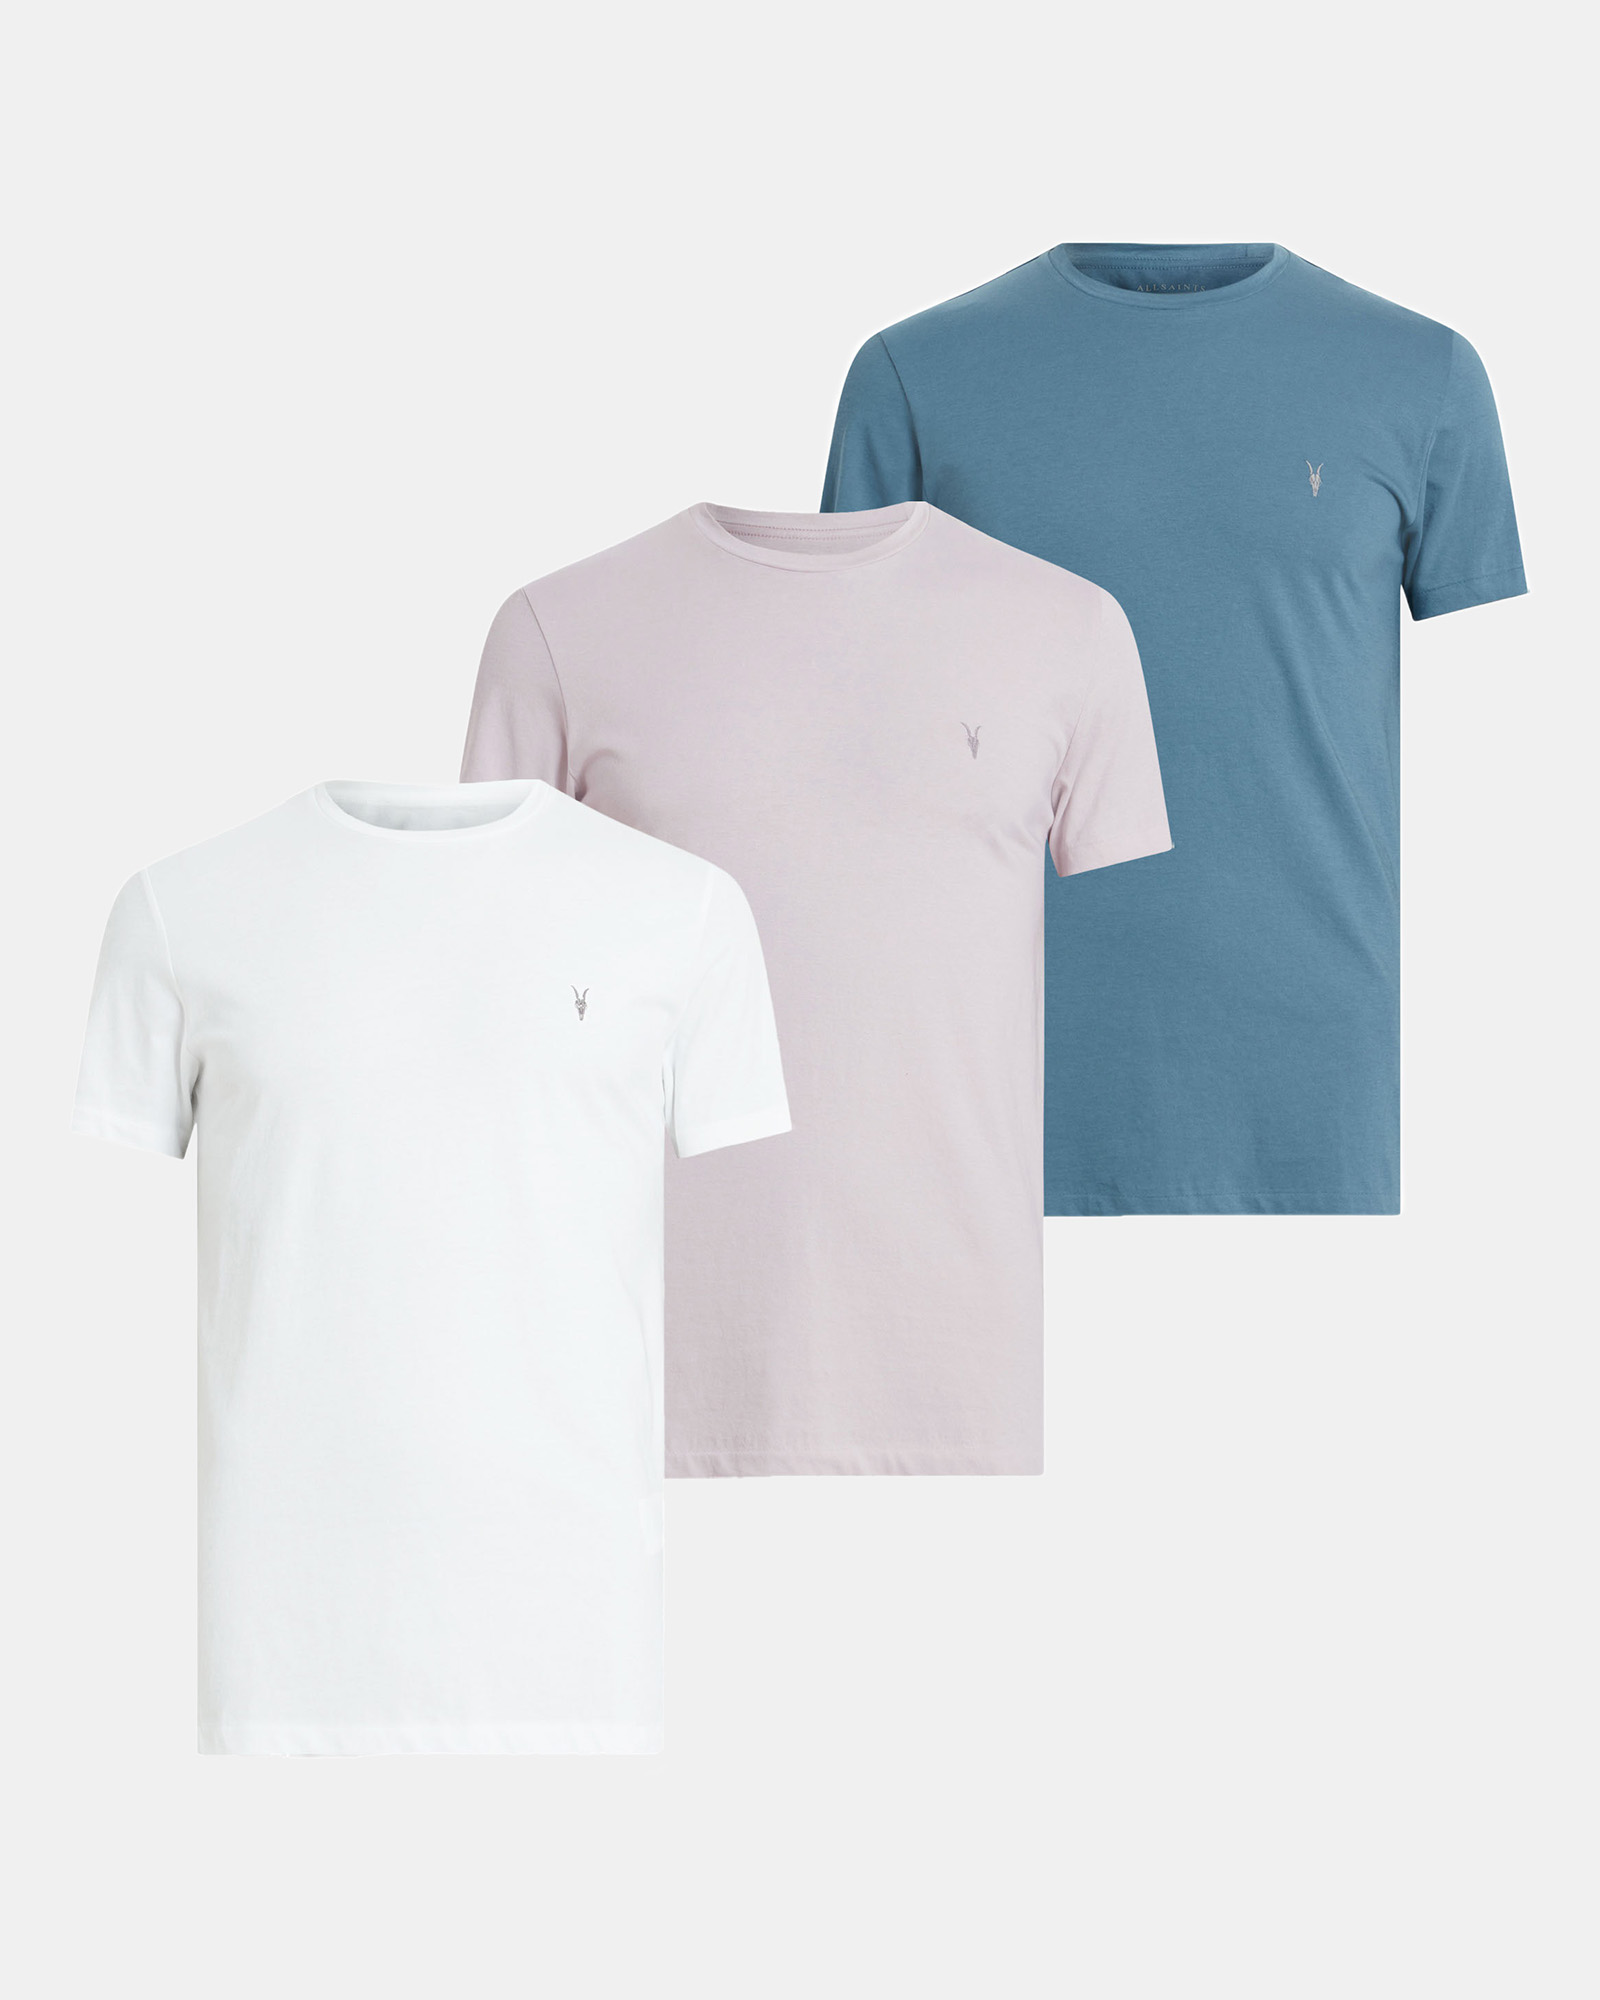 AllSaints Tonic Crew Ramskull T-Shirts 3 Pack,, Opt Wht/lilac/blue